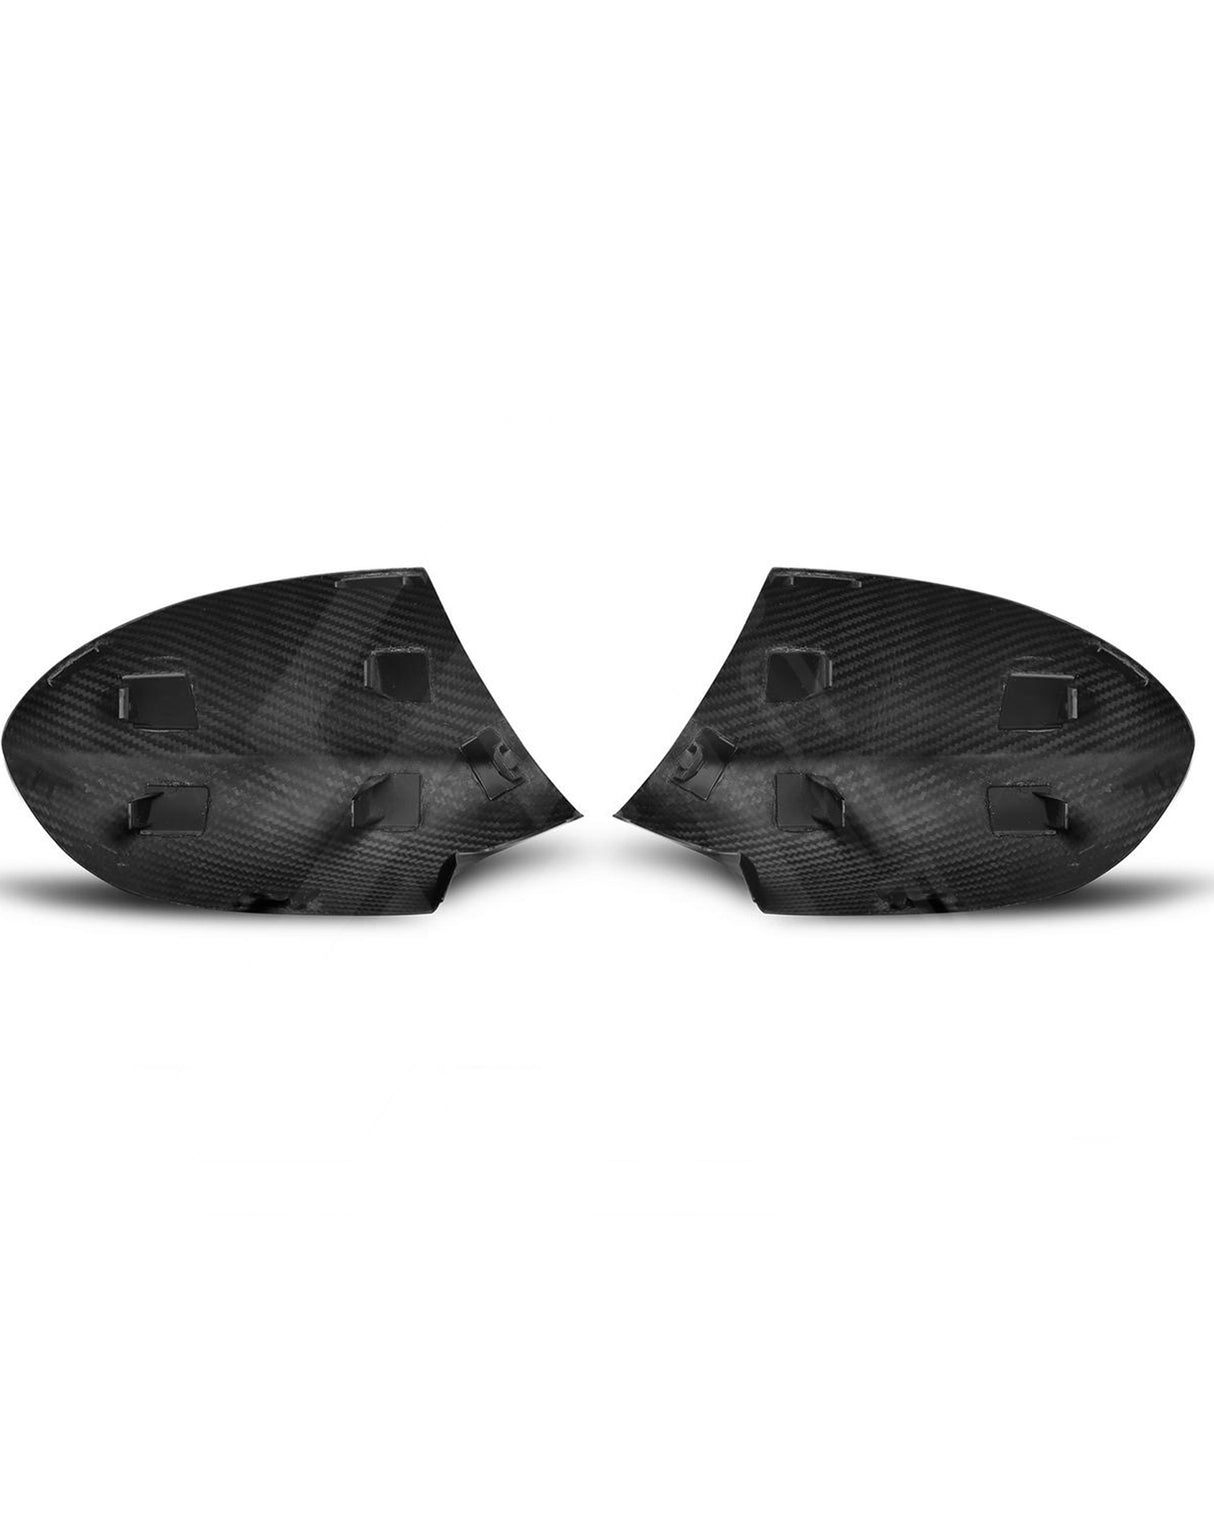 E92 M3 Dry Carbon Fiber Replacement Mirror Caps